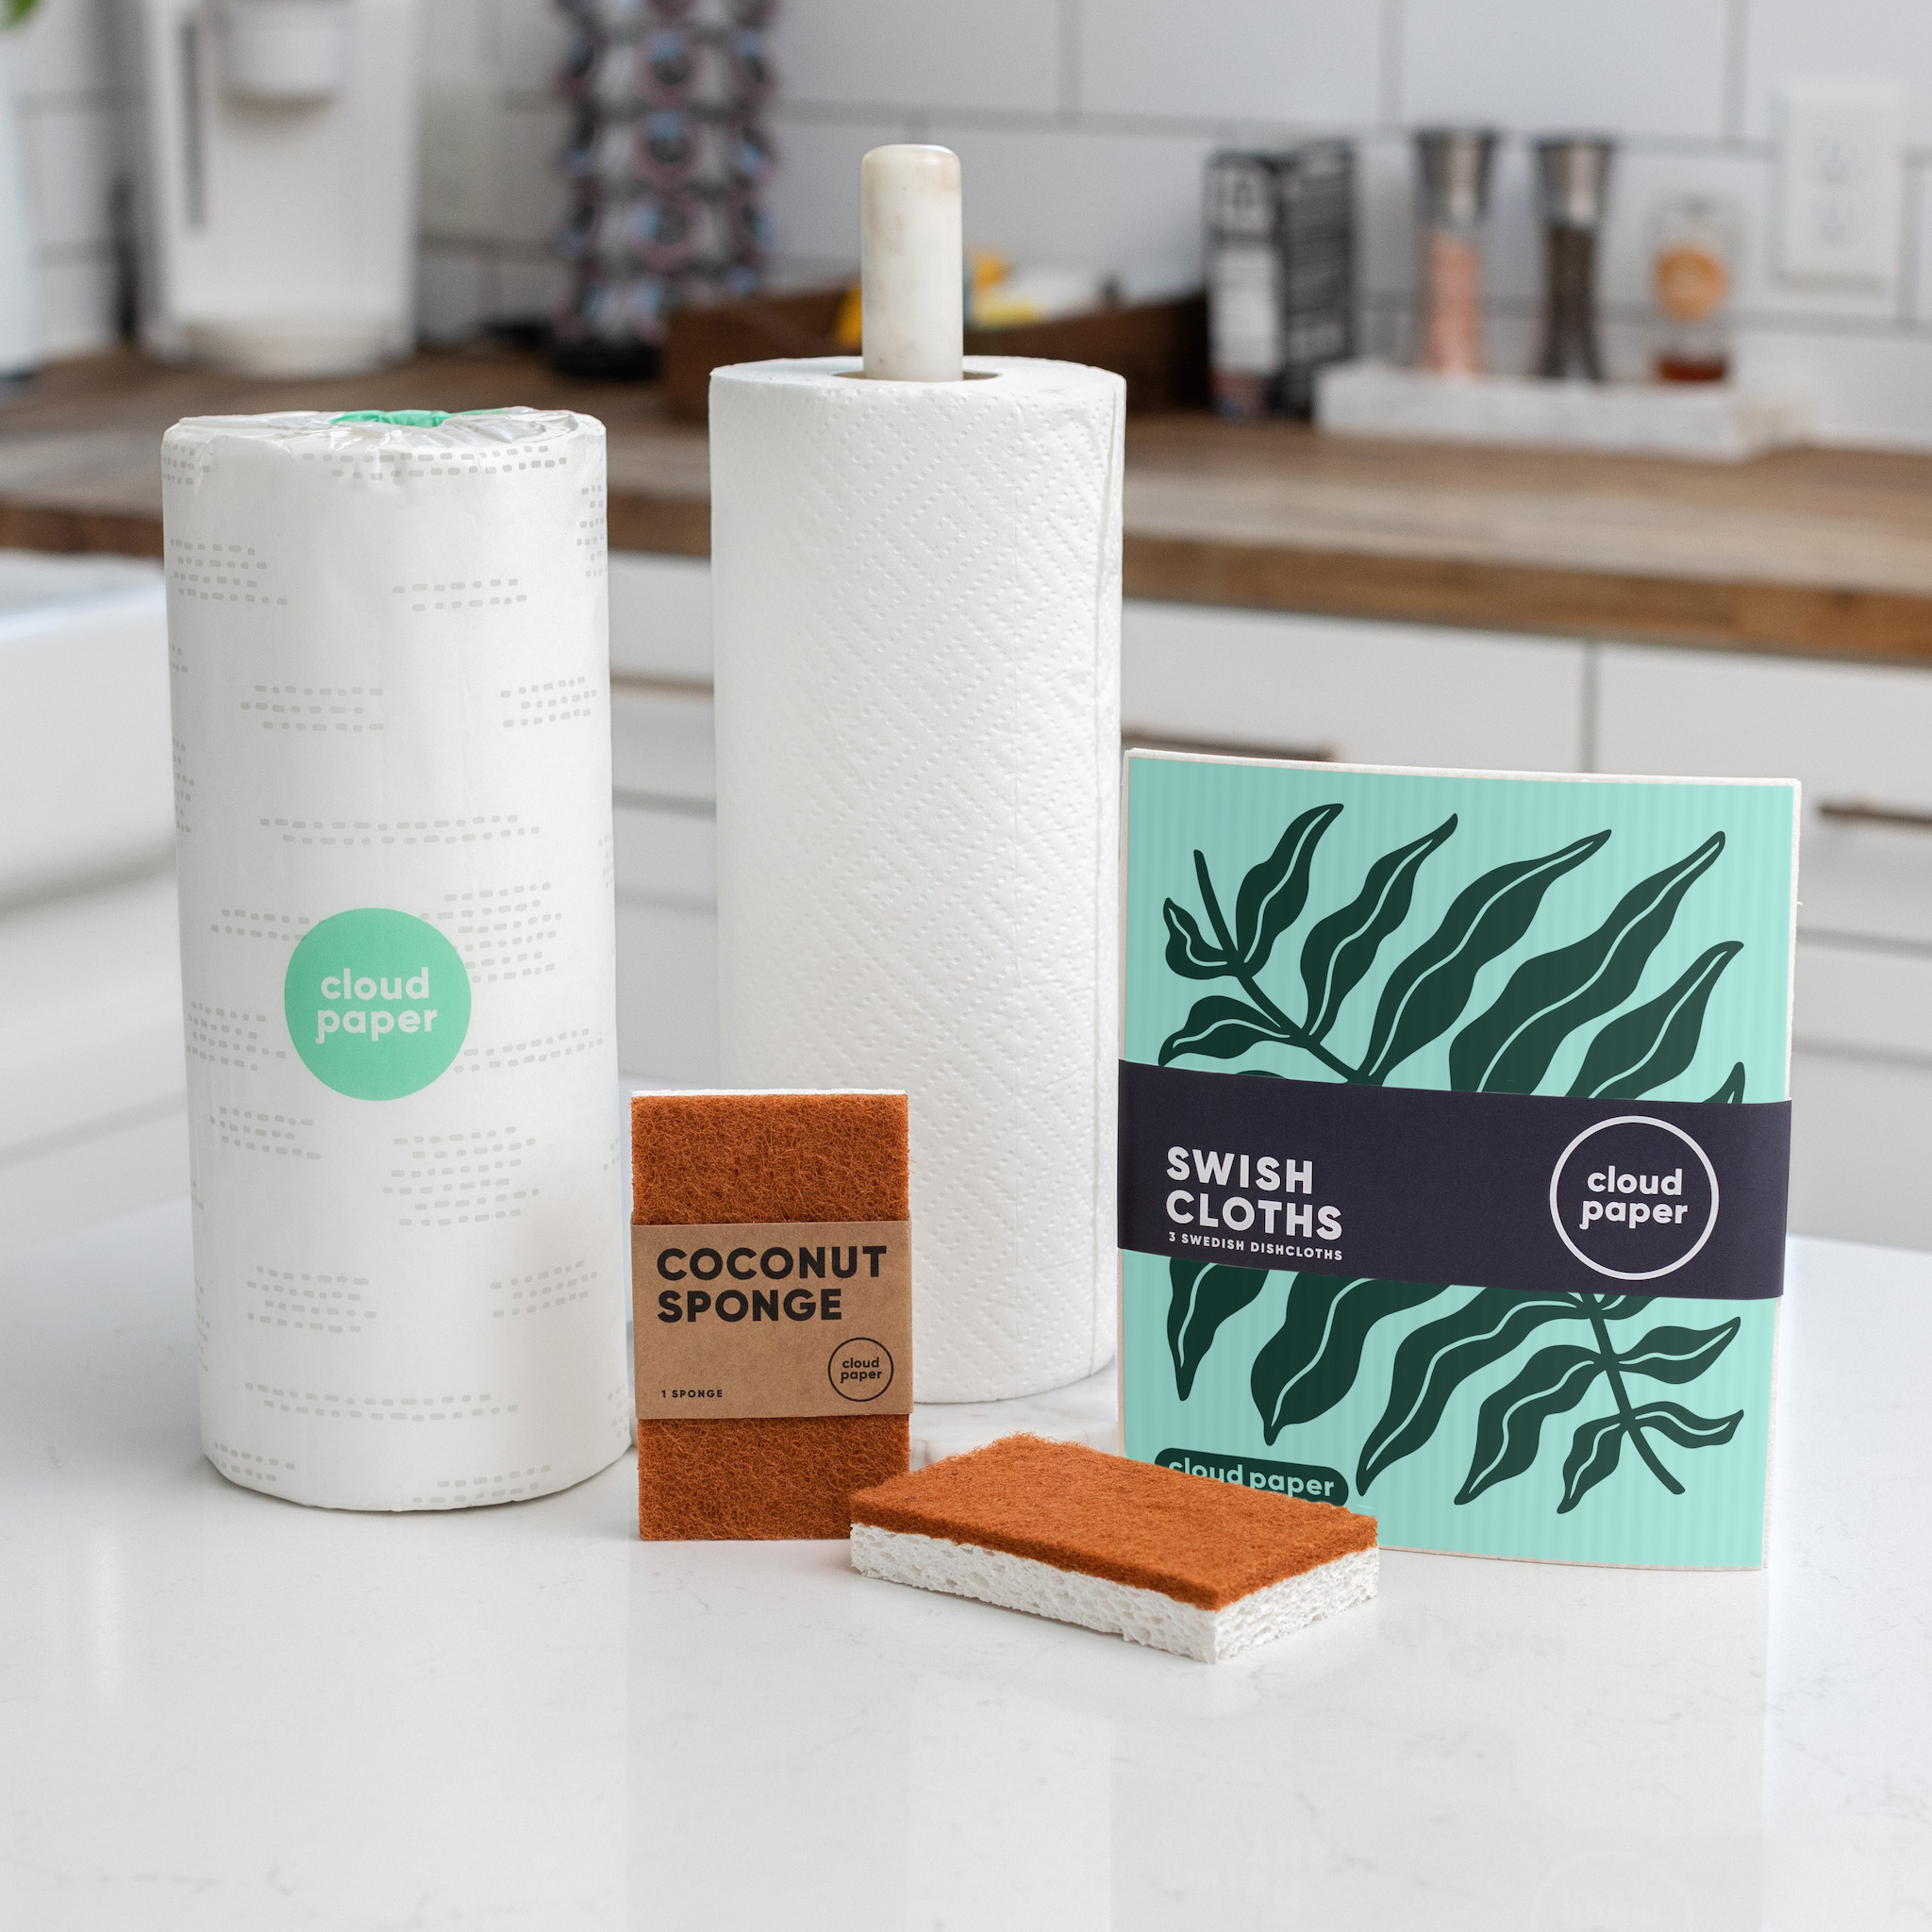 Reusable Paper Towels-Compostable Dishcloth-Go-Compost